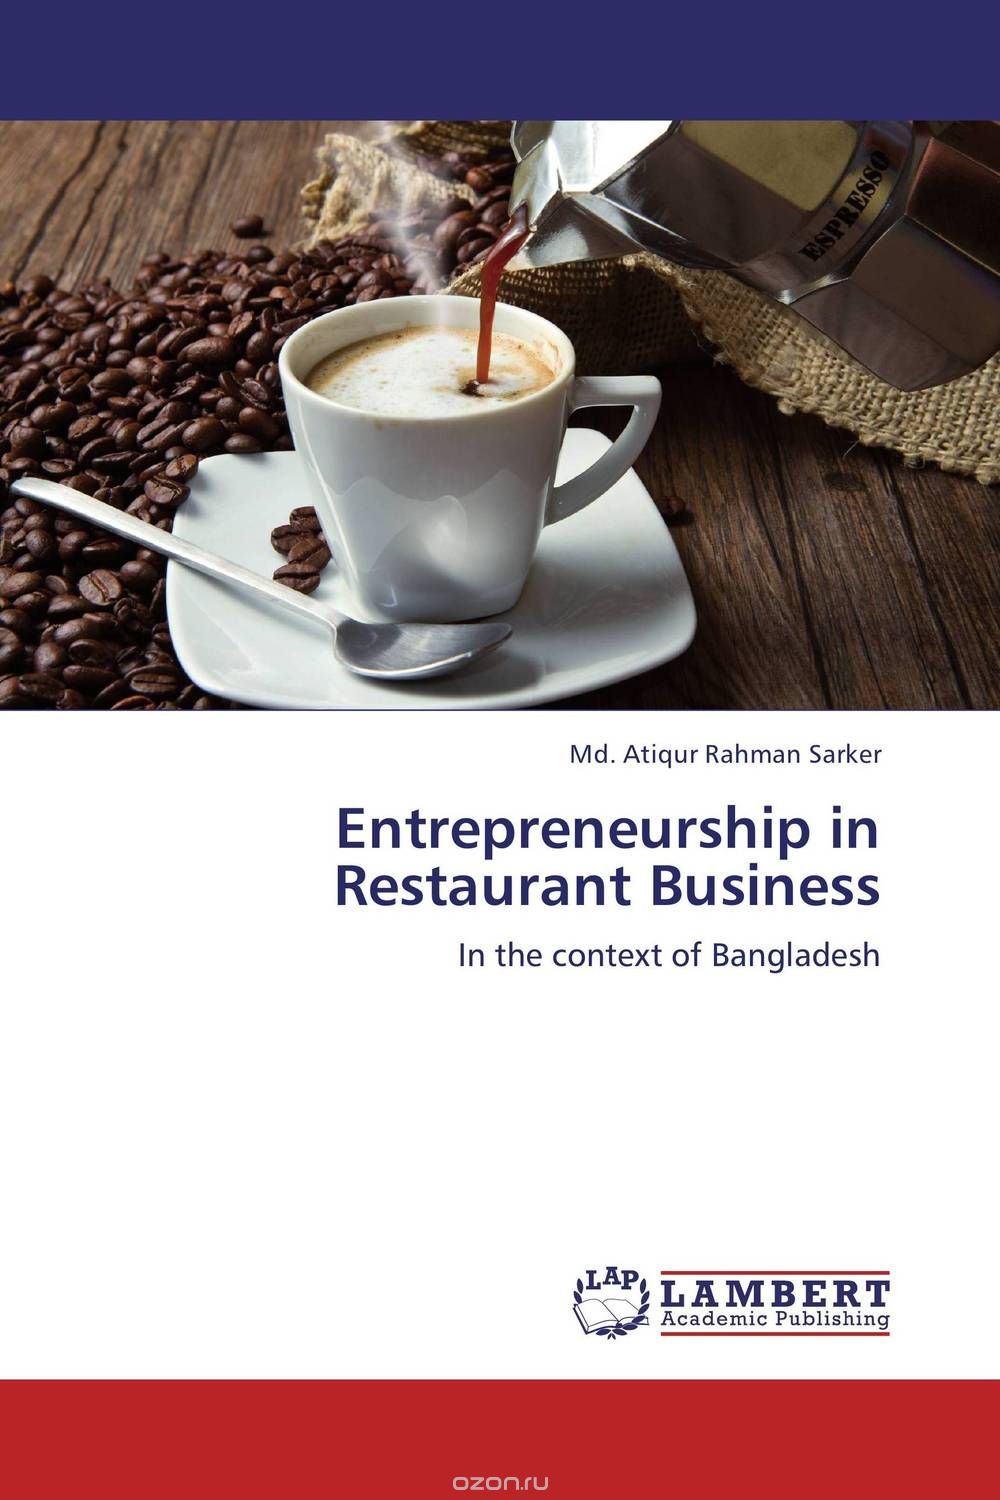 Скачать книгу "Entrepreneurship in Restaurant Business"